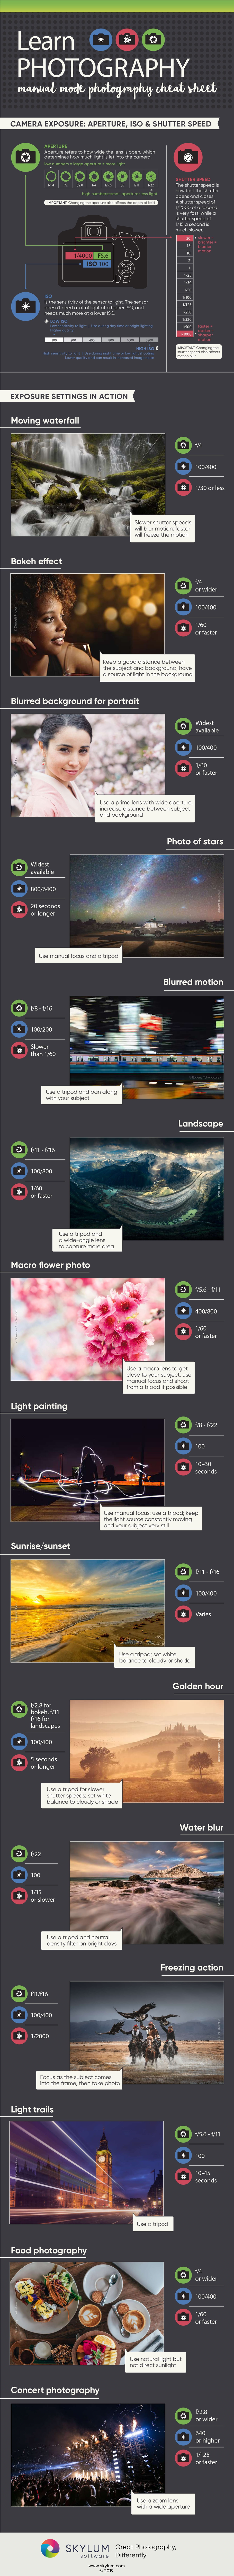 Photography Basics: Mastering Manual Mode Settings | Skylum Blog